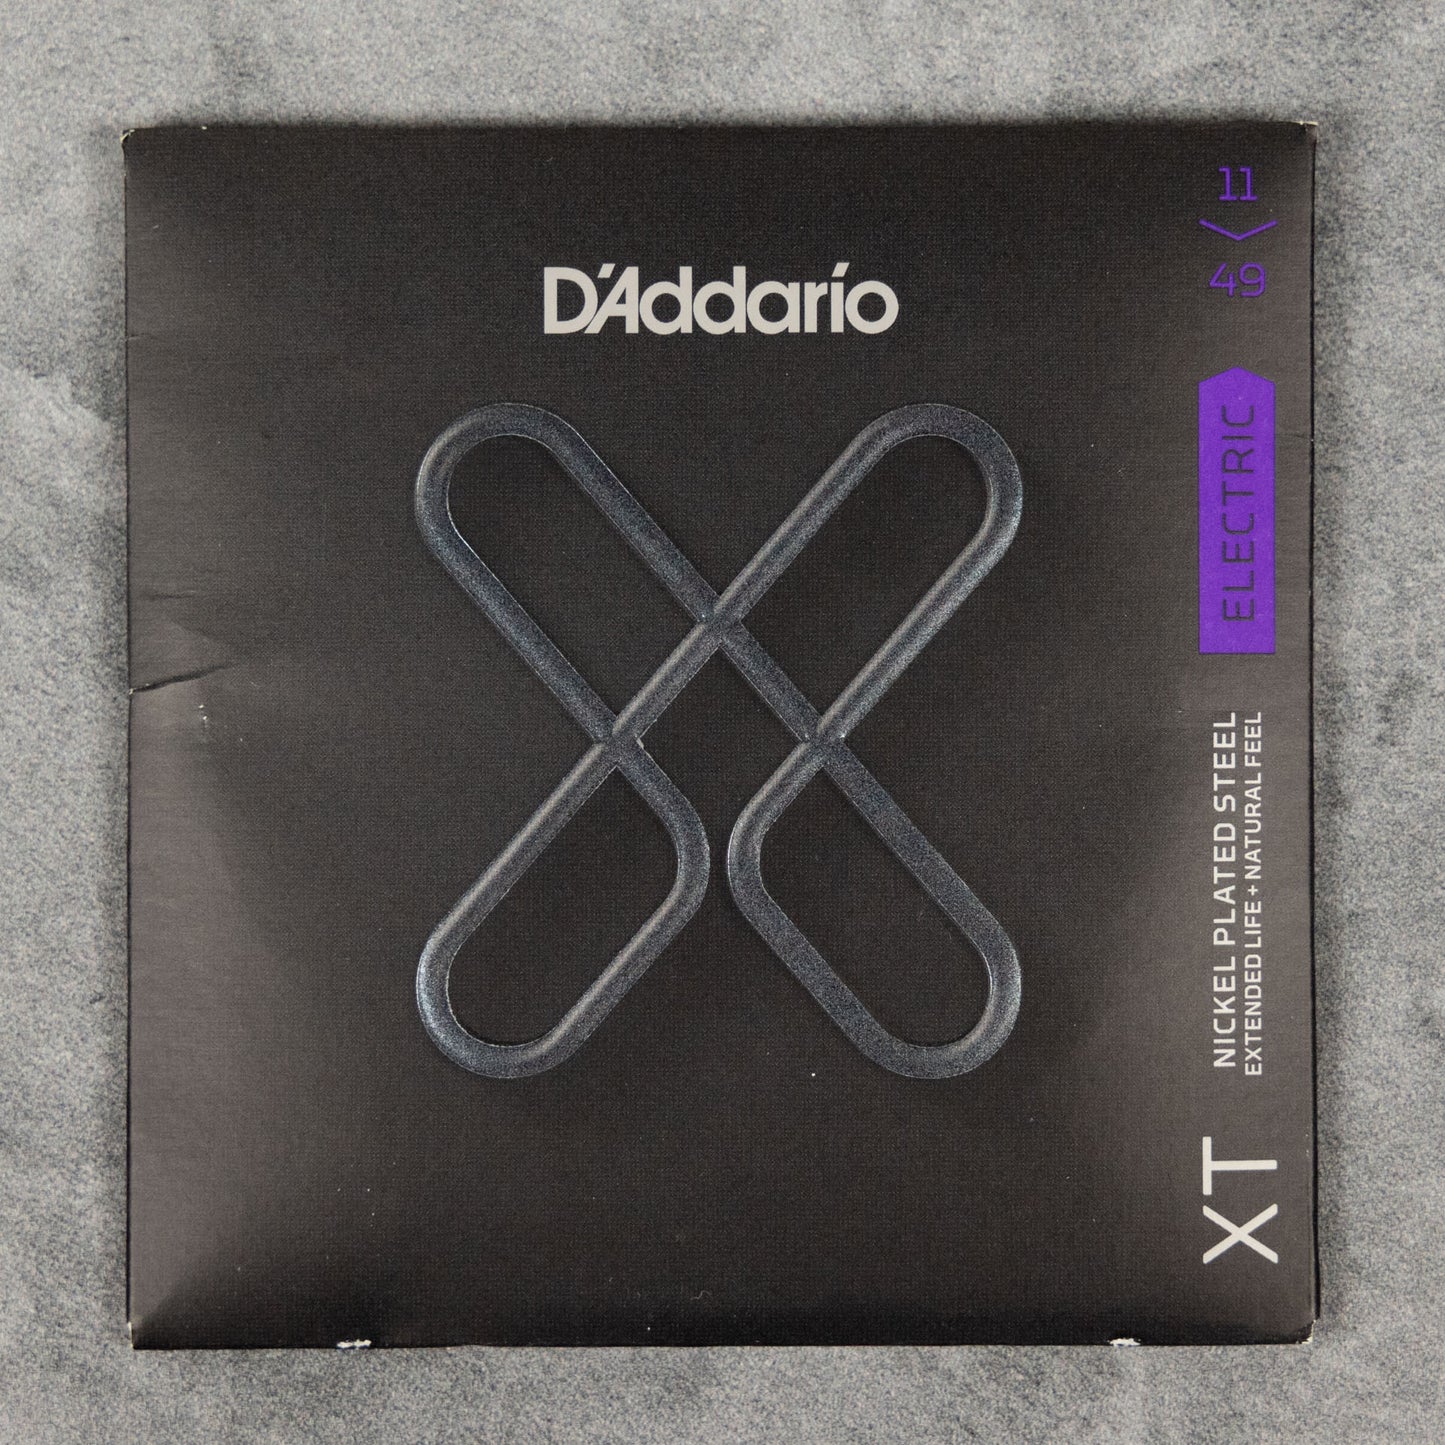 D'Addario XT Electric Nickel Wound Guitar Strings, 11-49, Medium